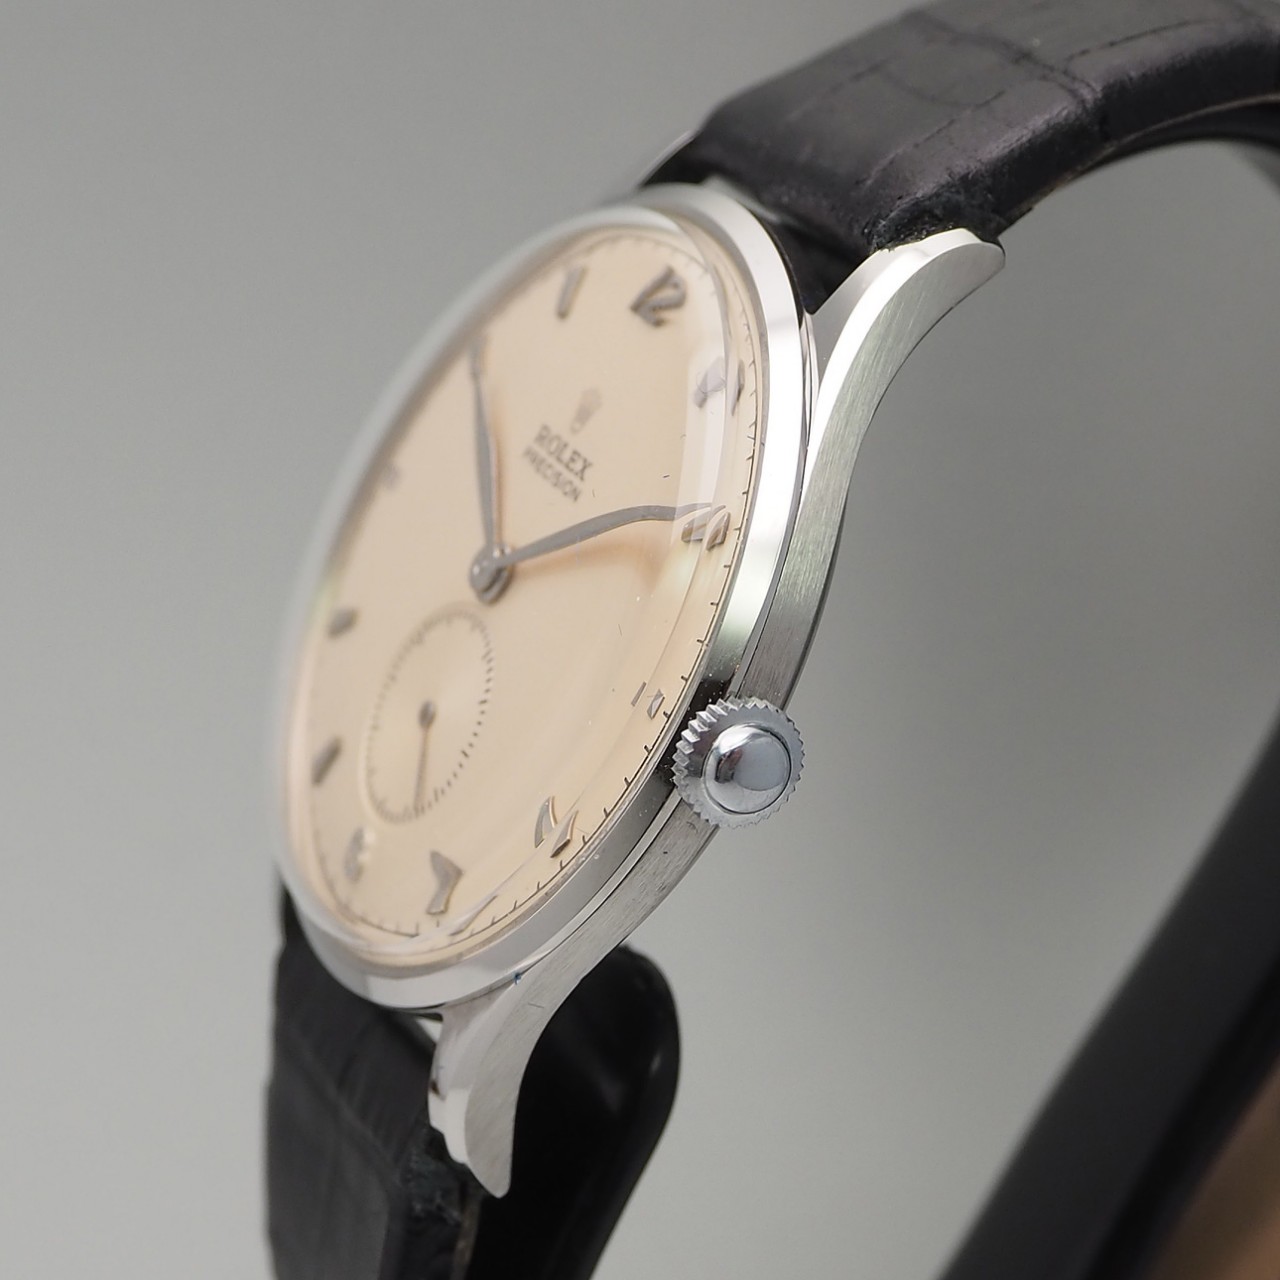 Rolex Precision small sec. Vintage 4583, Stahl/Leder, fully restored and serviced